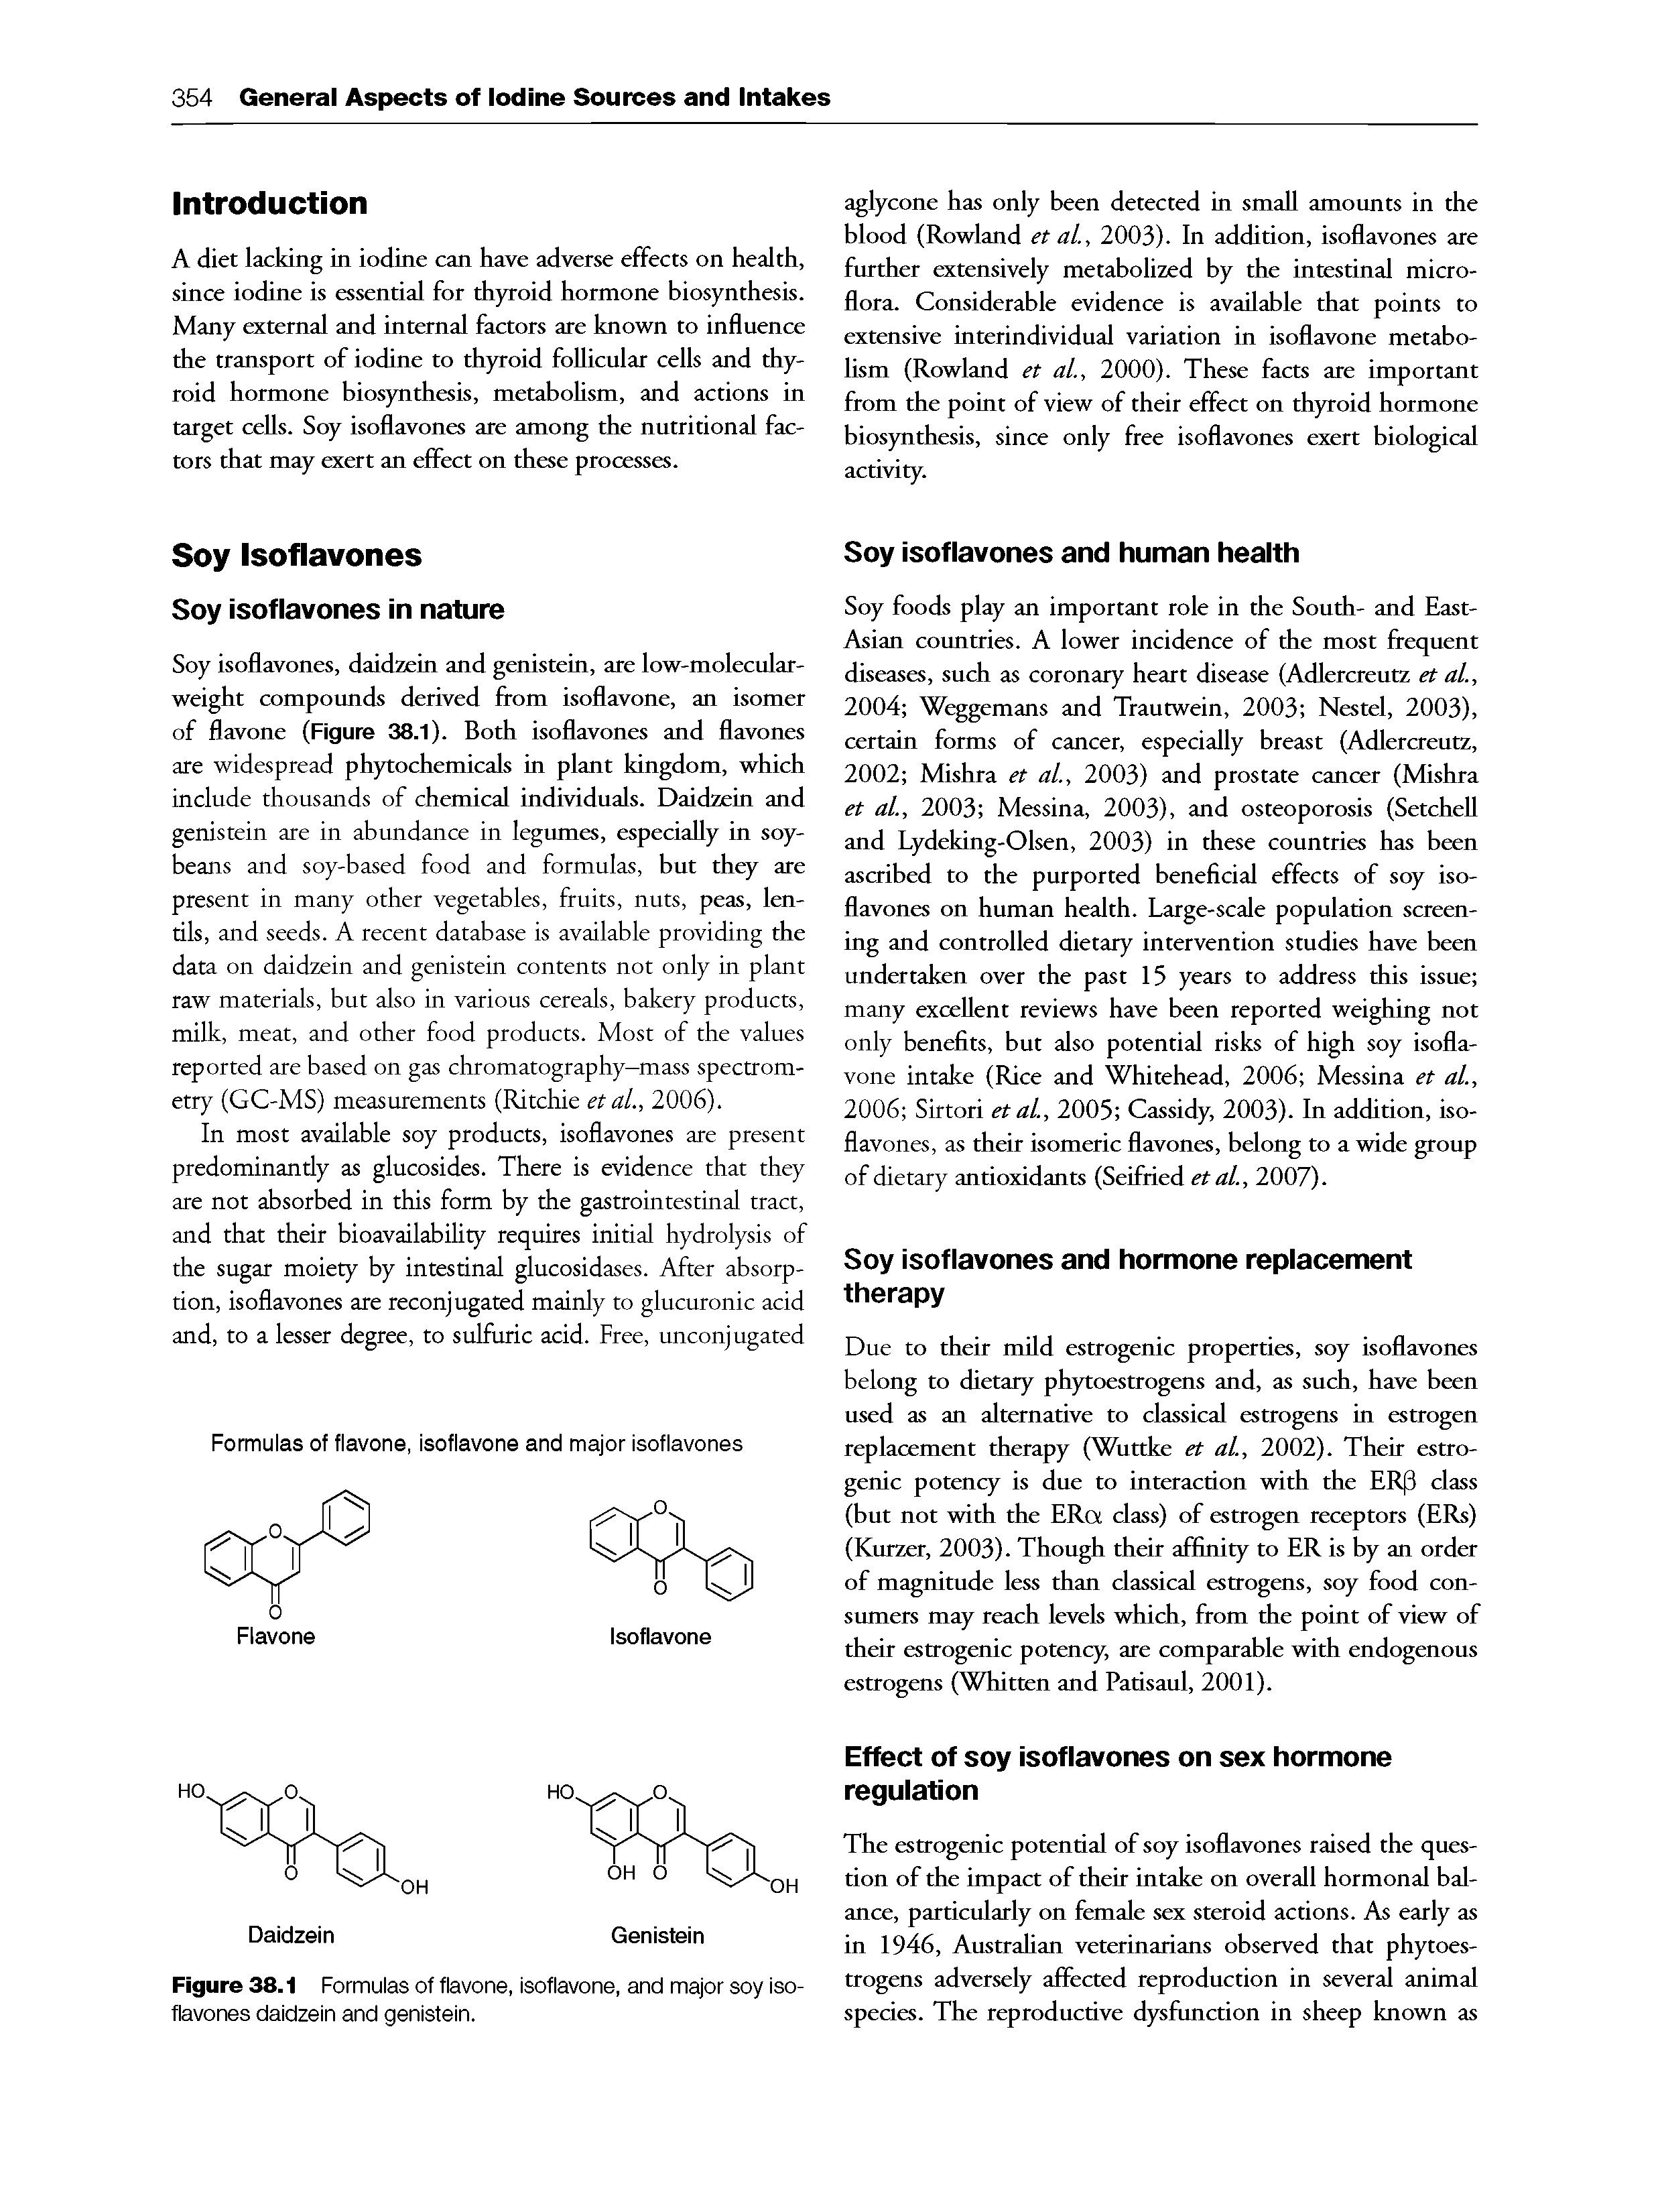 Figure 38.1 Formulas of flavone, Isoflavone, and major soy Isoflavones daidzein and genistein.